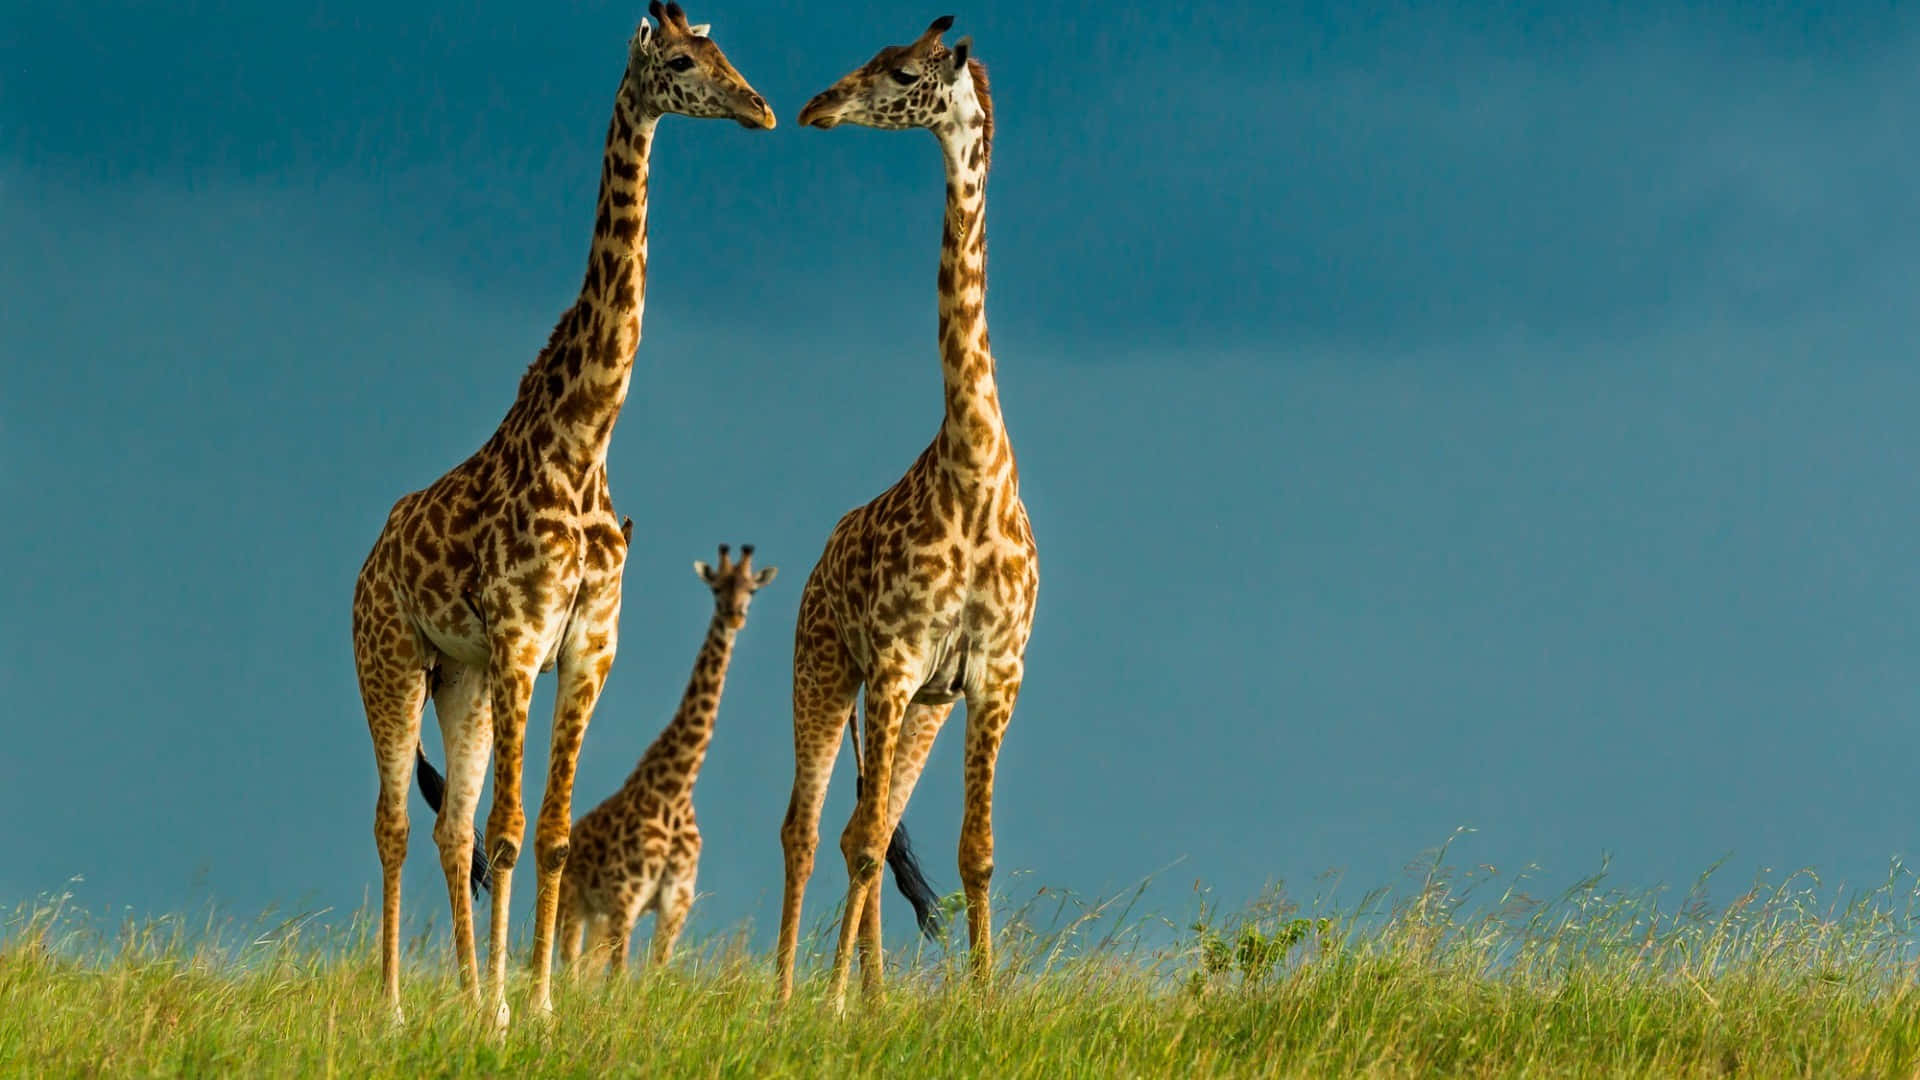 A stunningly beautiful Long-Necked Giraffe